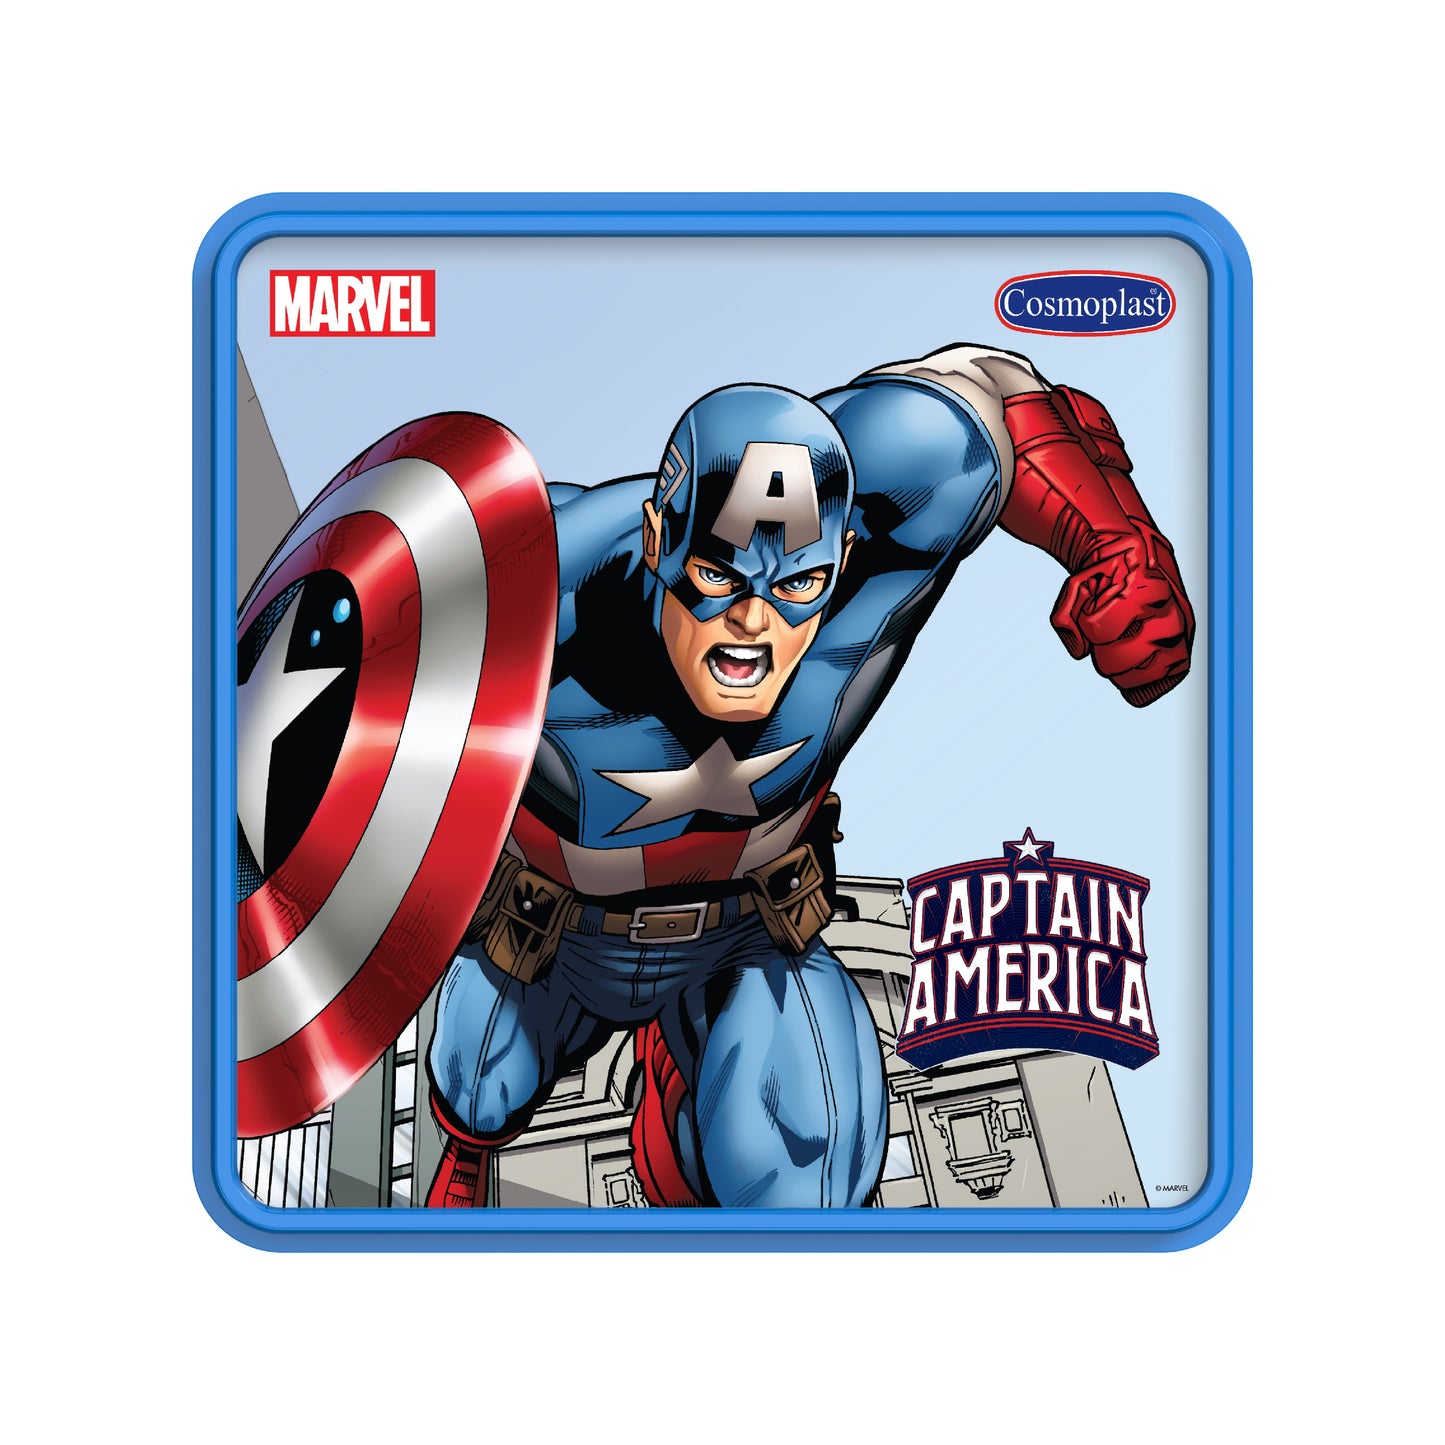 Cosmoplast Disney Marvel Avengers Storage Box 10 Liters